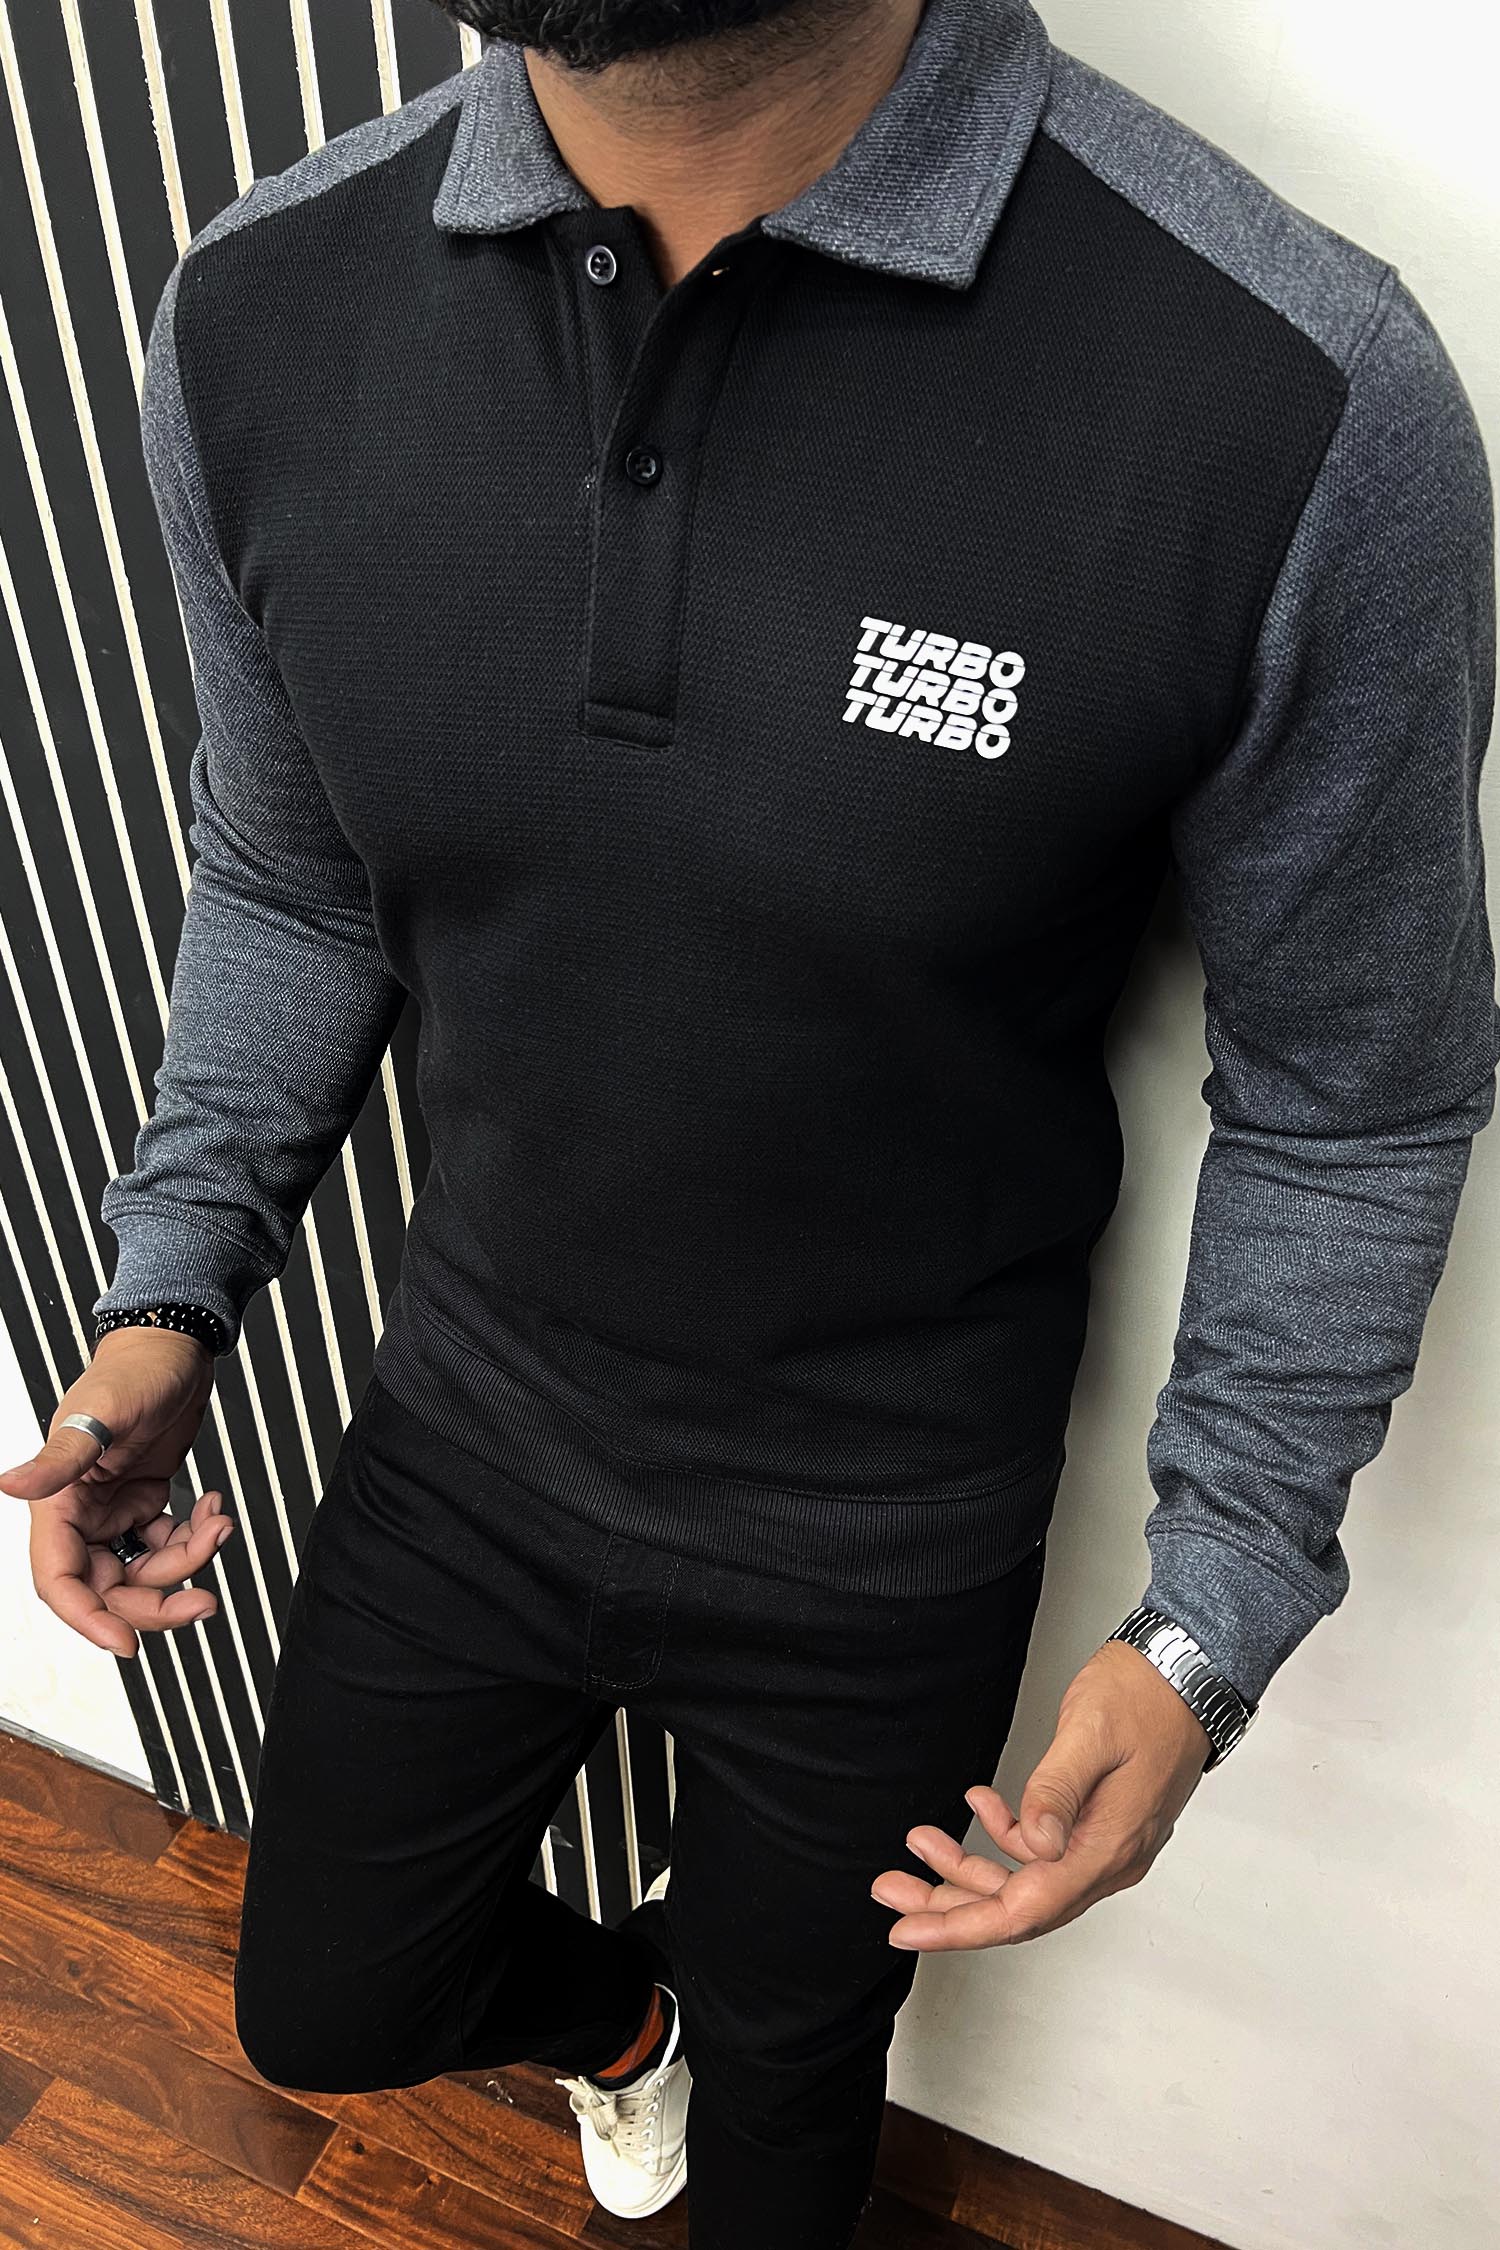 Turbo Printed Logo Cropped Collar Sweatshirt In Black